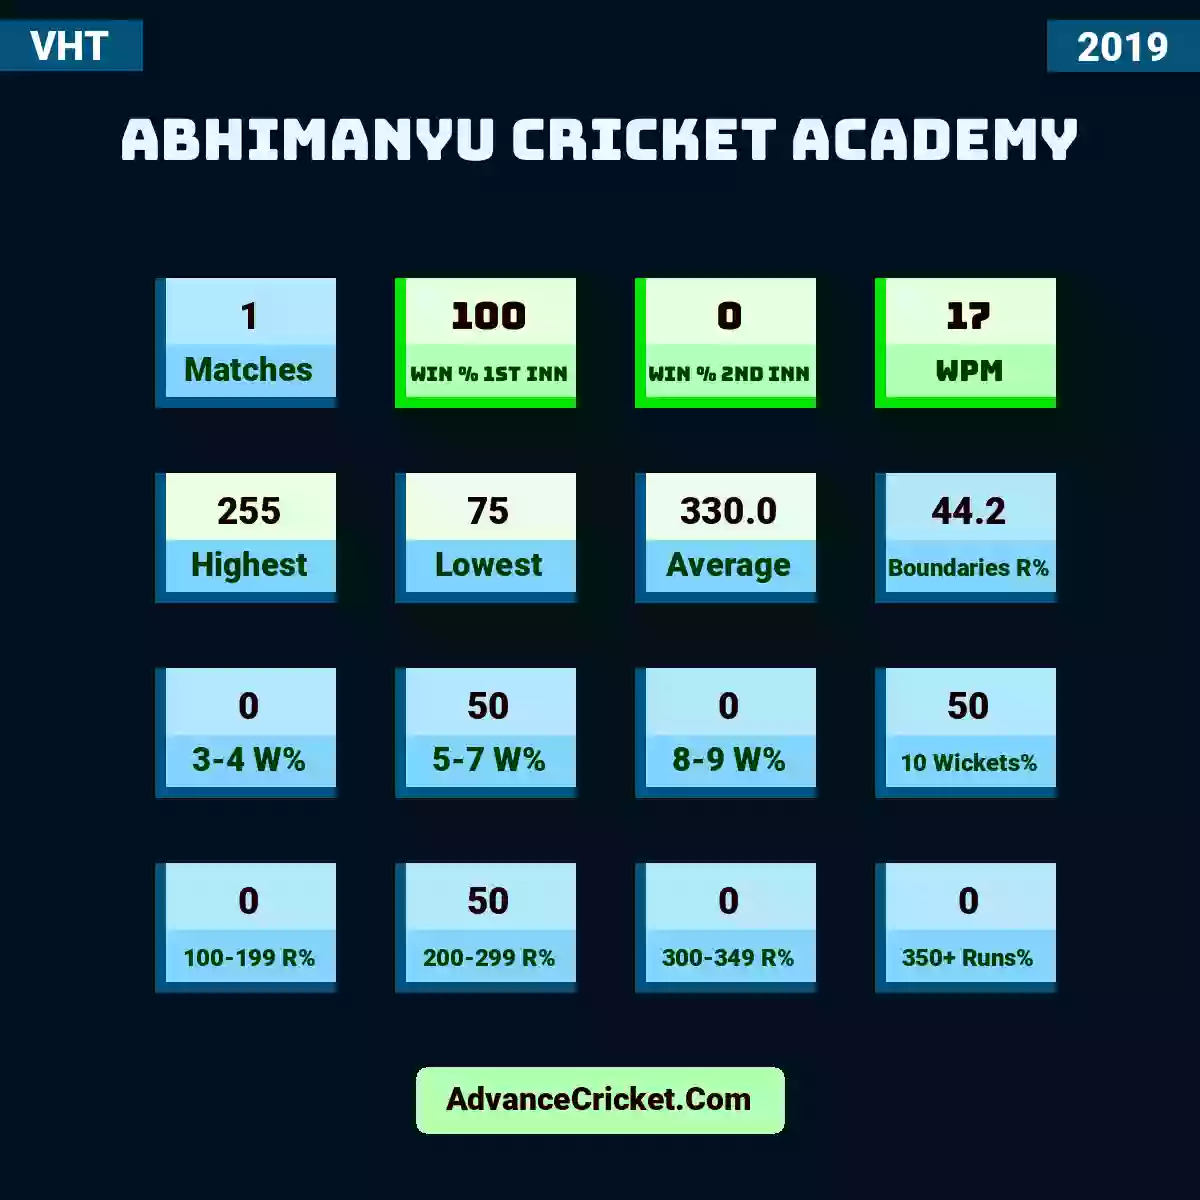 Image showing Abhimanyu Cricket Academy with Matches: 1, Win % 1st Inn: 100, Win % 2nd Inn: 0, WPM: 17, Highest: 255, Lowest: 75, Average: 330.0, Boundaries R%: 44.2, 3-4 W%: 0, 5-7 W%: 50, 8-9 W%: 0, 10 Wickets%: 50, 100-199 R%: 0, 200-299 R%: 50, 300-349 R%: 0, 350+ Runs%: 0.